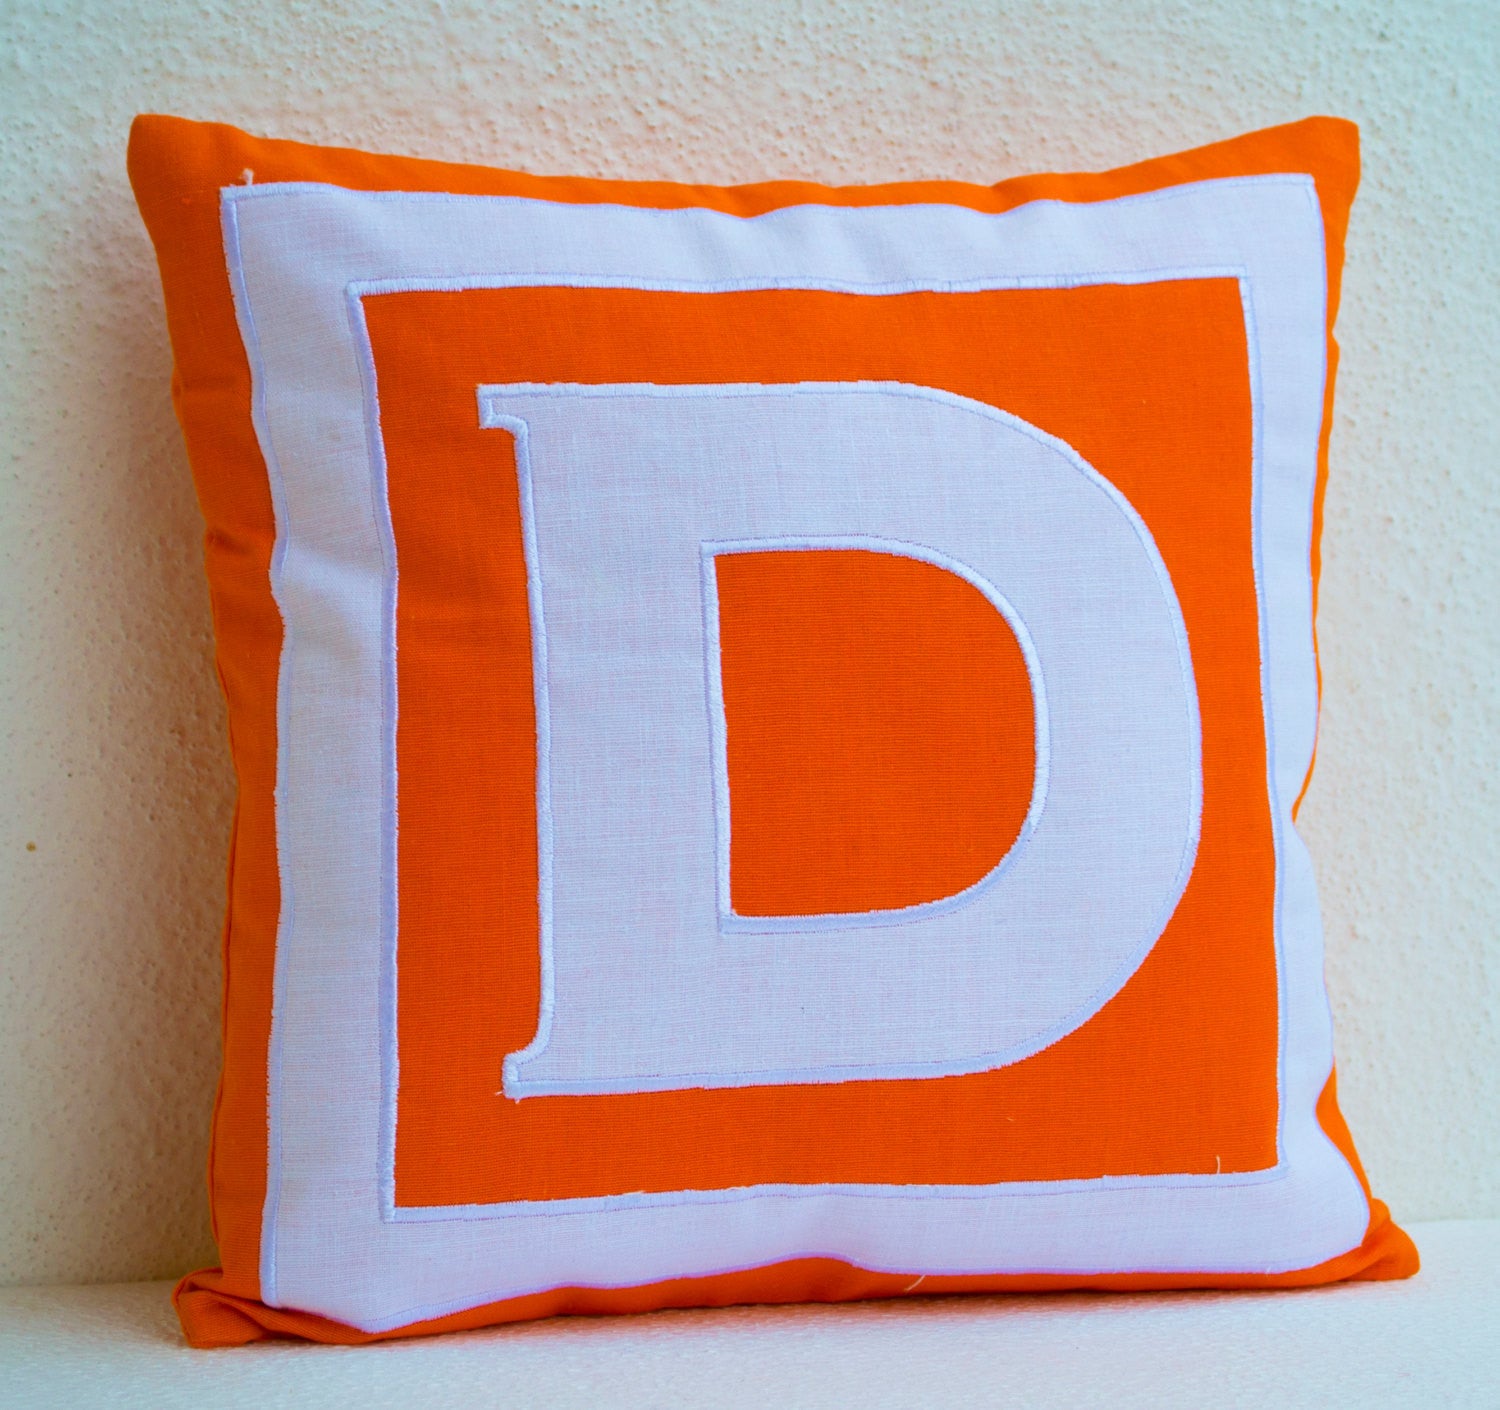 Shop for handmade orange and white cushion with alphabet monogram